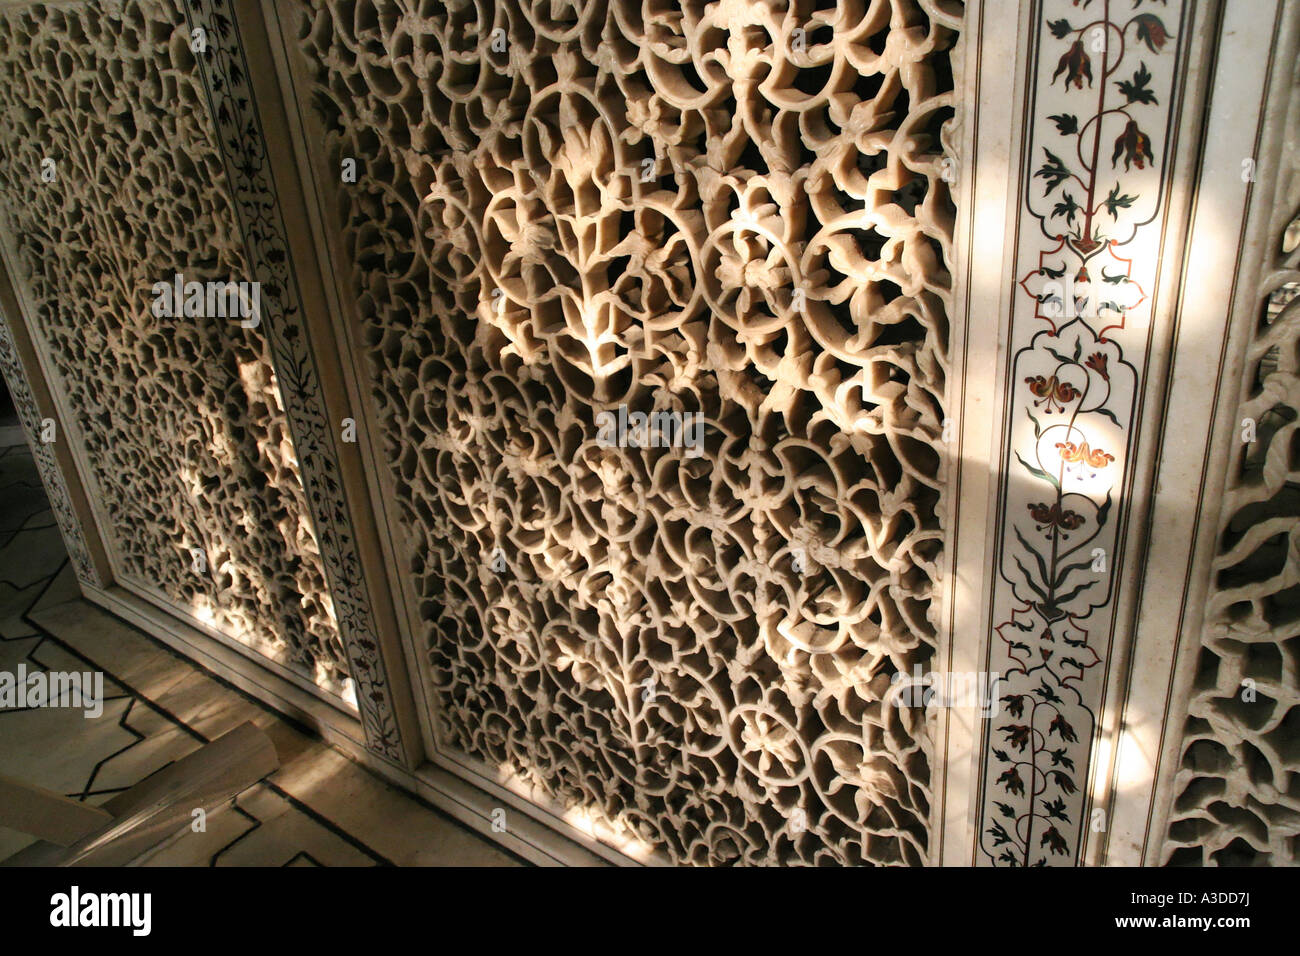 Taj Mahal Interieur Marmor Ornamente Mit Edelstein Inlays